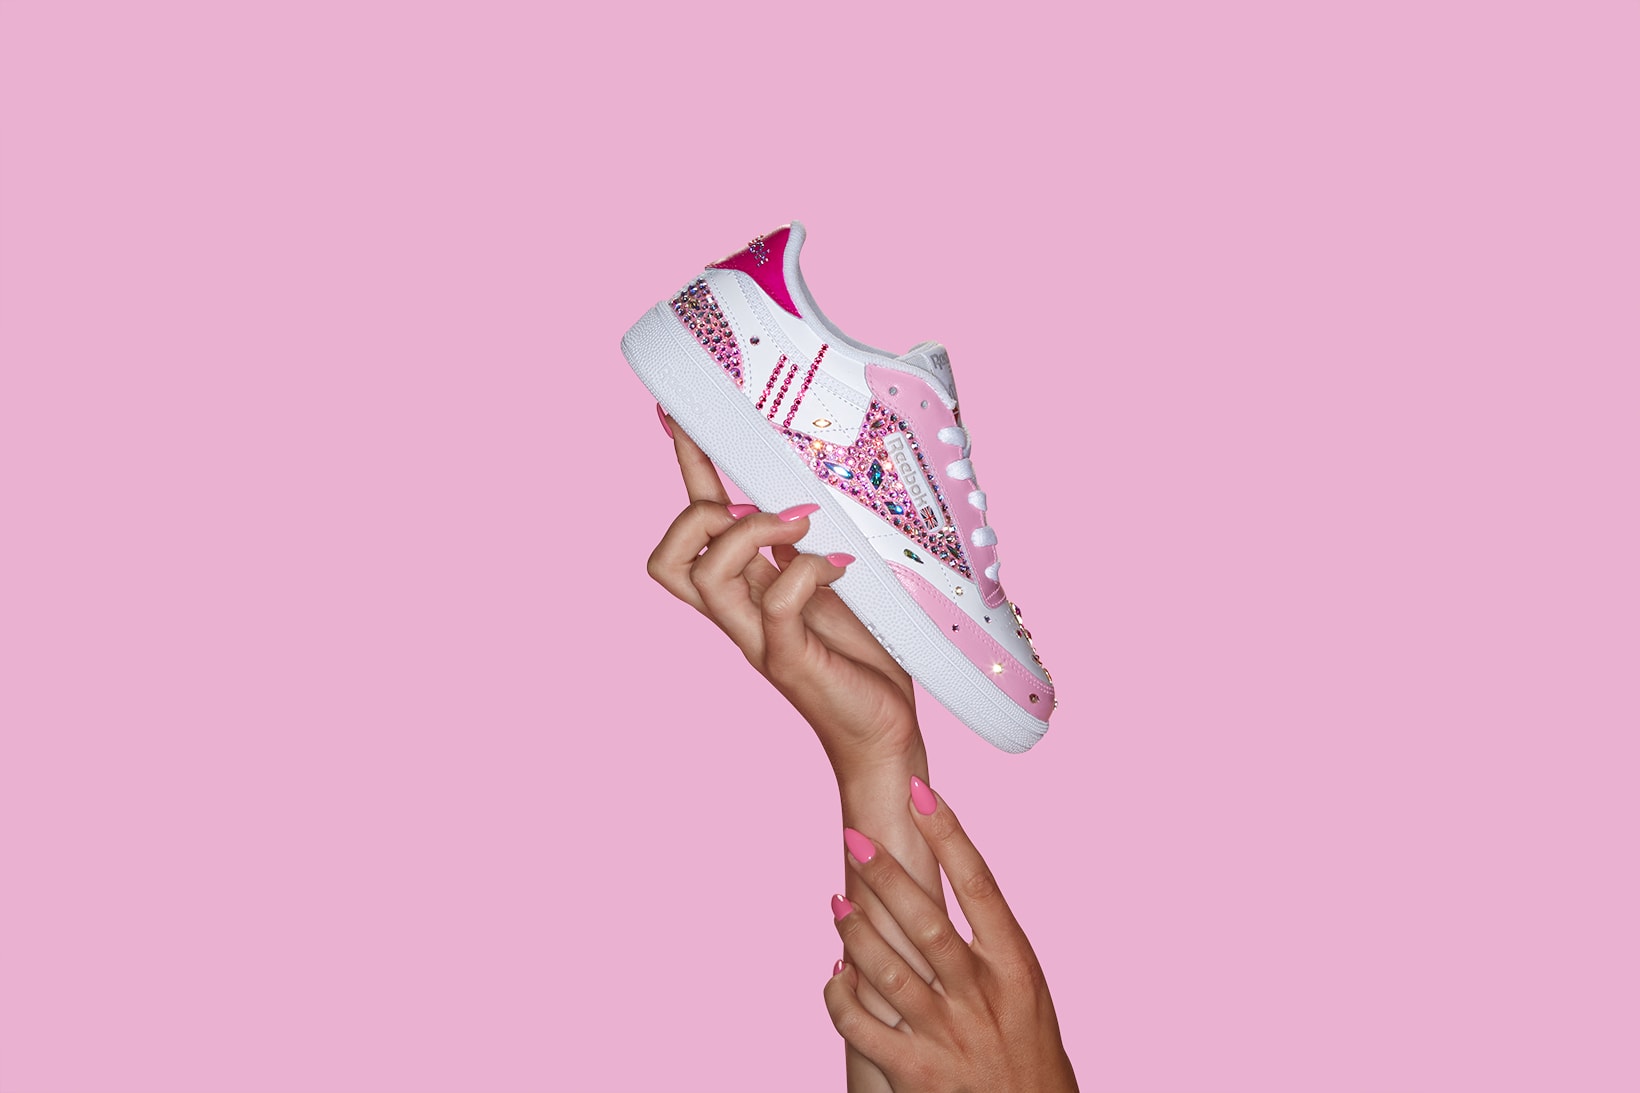 reebok limited edition crystal coated club c sneakers cardi b nails pink release shoes footwear sneakerhead swarovski amazon google home